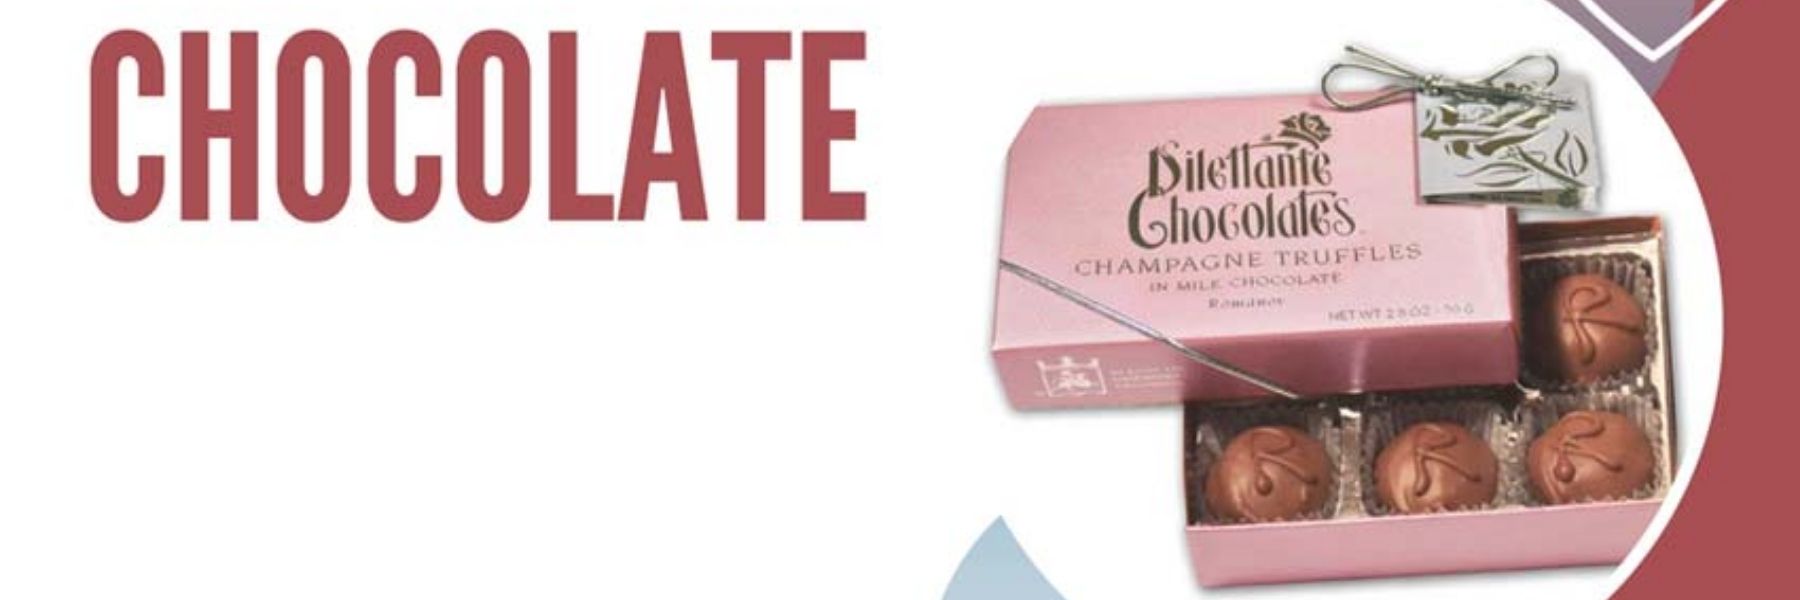 Dilettante Chocolates Champagne Romanov Truffles for Valentine's Day Blog Banner